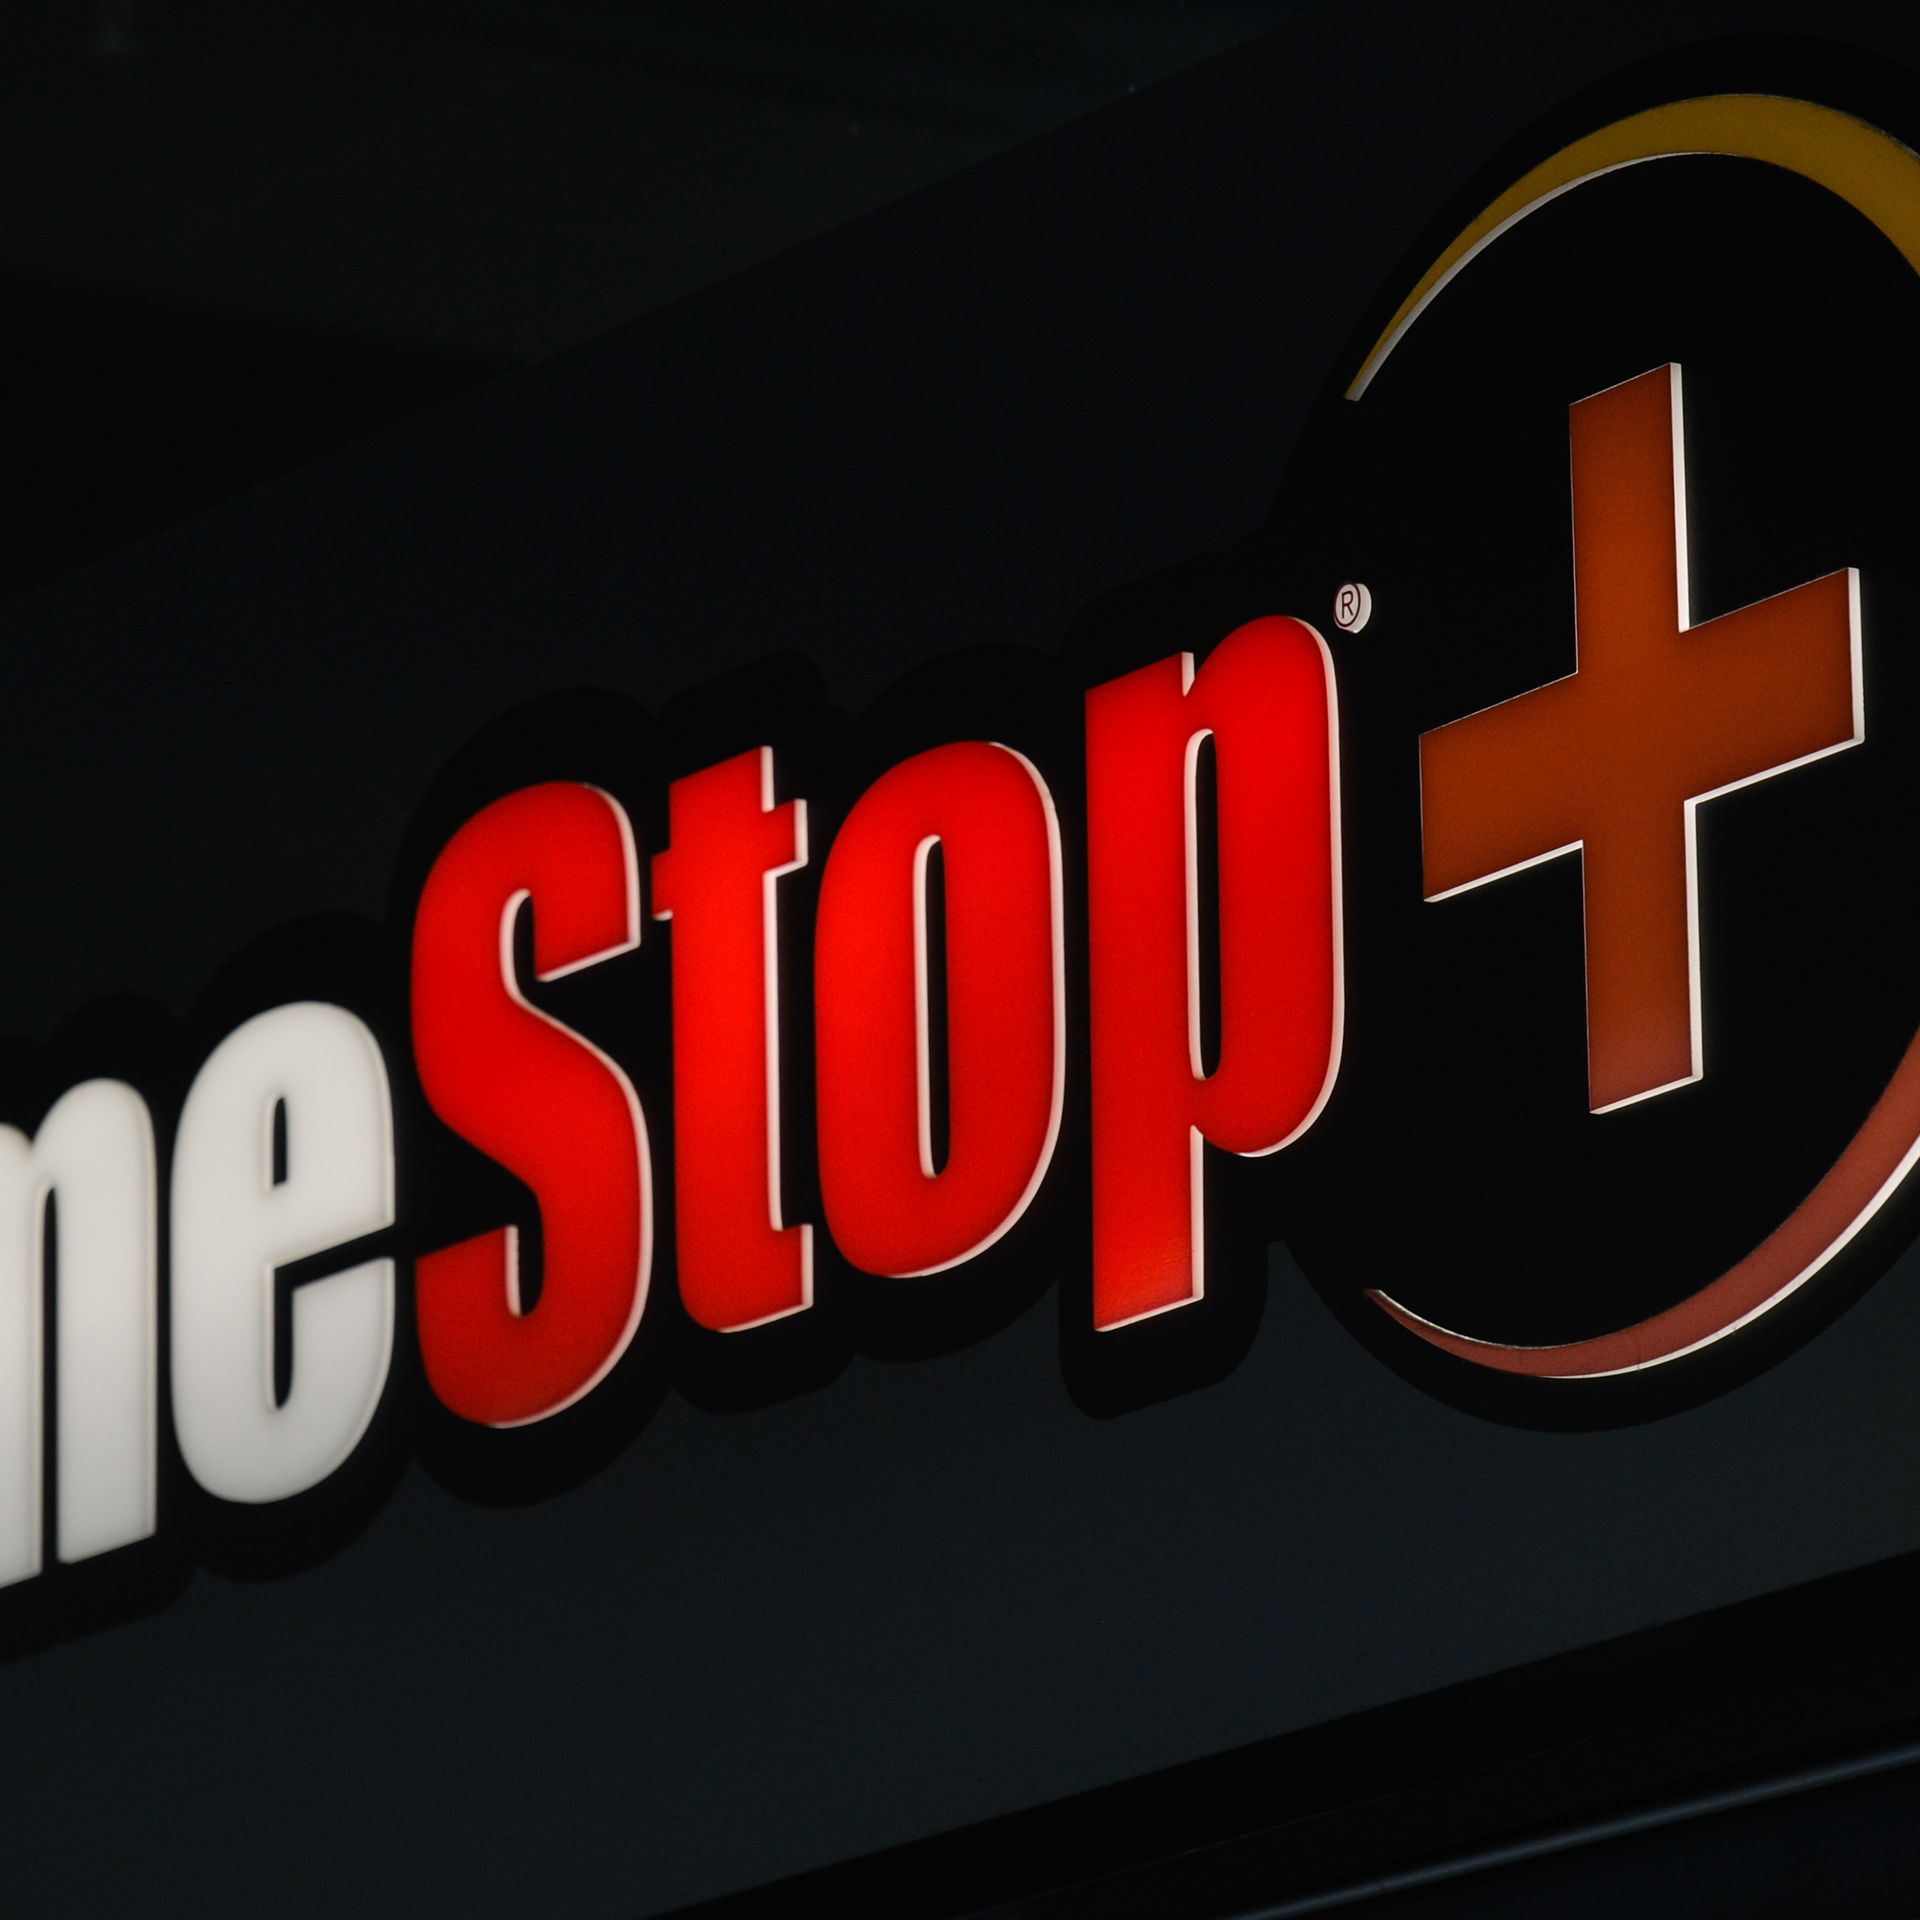 Gamestop logo